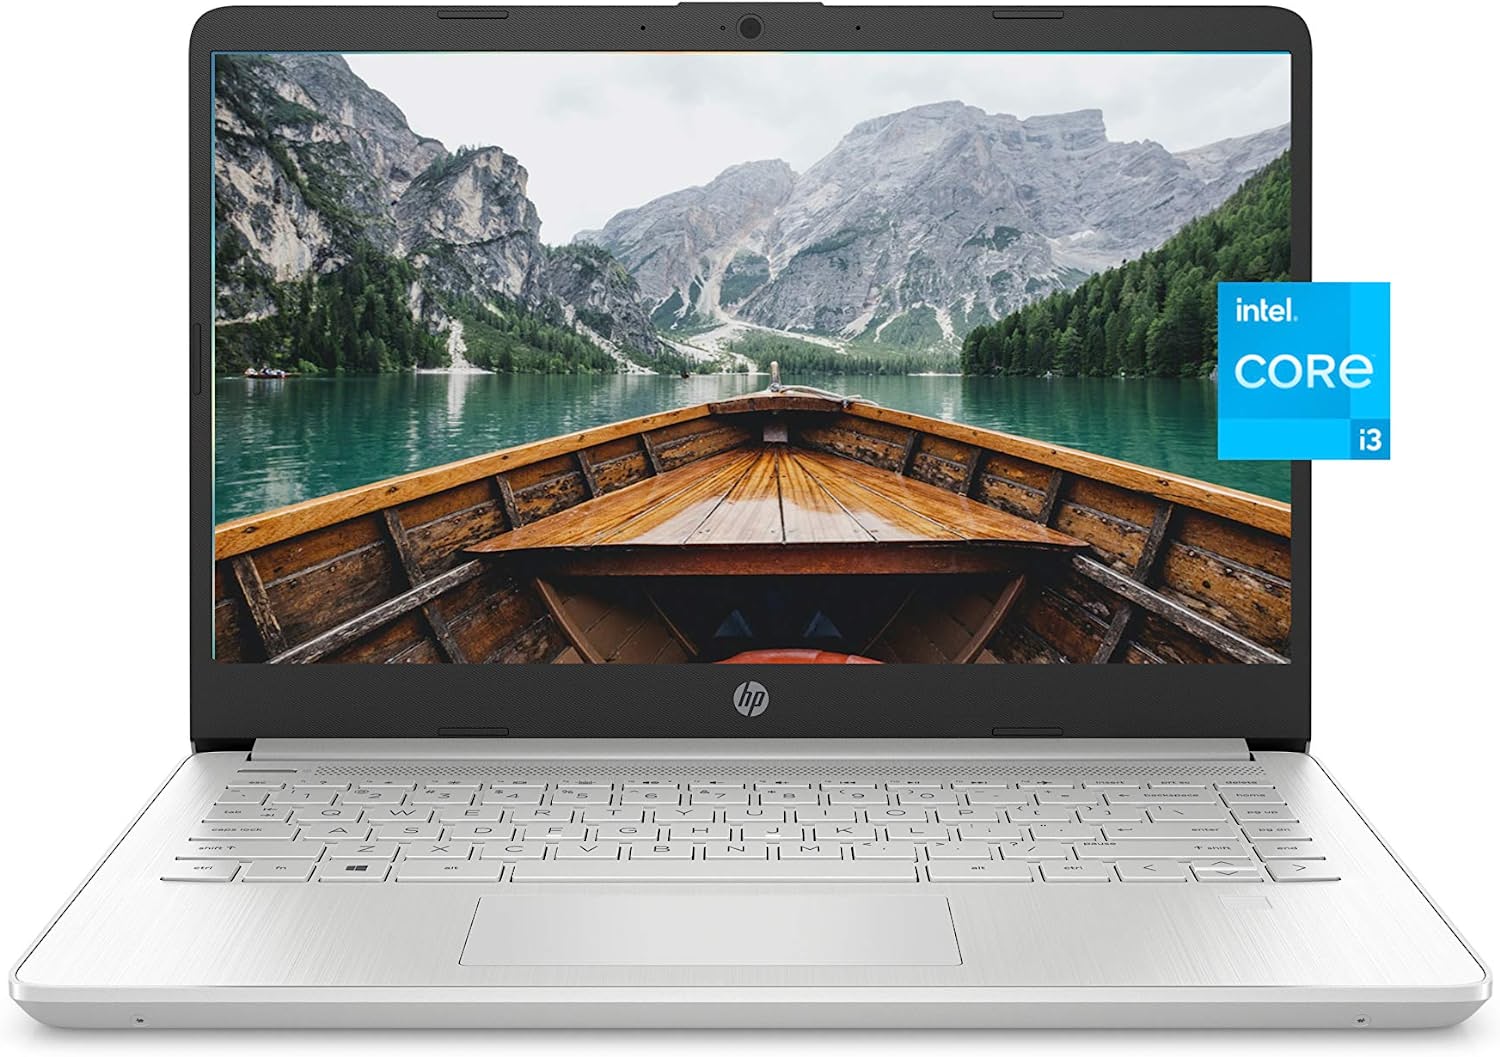 HP 14 Laptop, 11th Gen Intel Core i3-1115G4, 4 GB RAM, 128 GB SSD Storage, 14-inch Full HD Display, Windows 10 in S Mode, Long Battery Life, HP Fast-Charge, Thin & Light Design (14-dq2020nr, 2021)